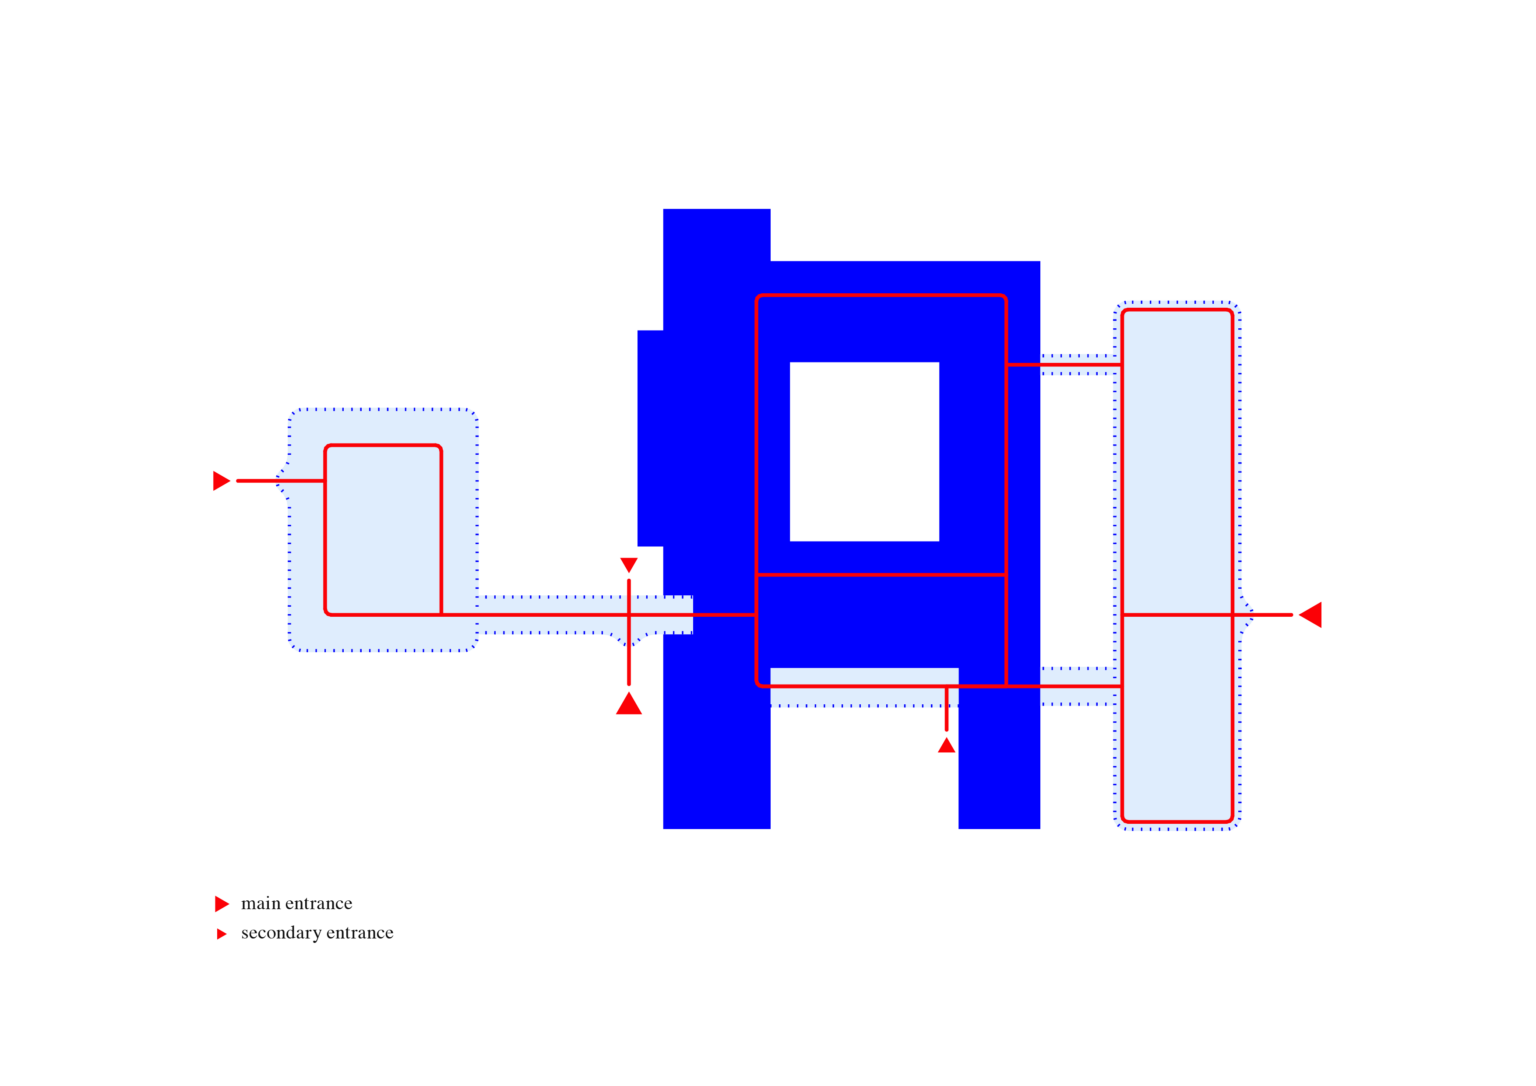 diagram improved accessibility through separate entrances